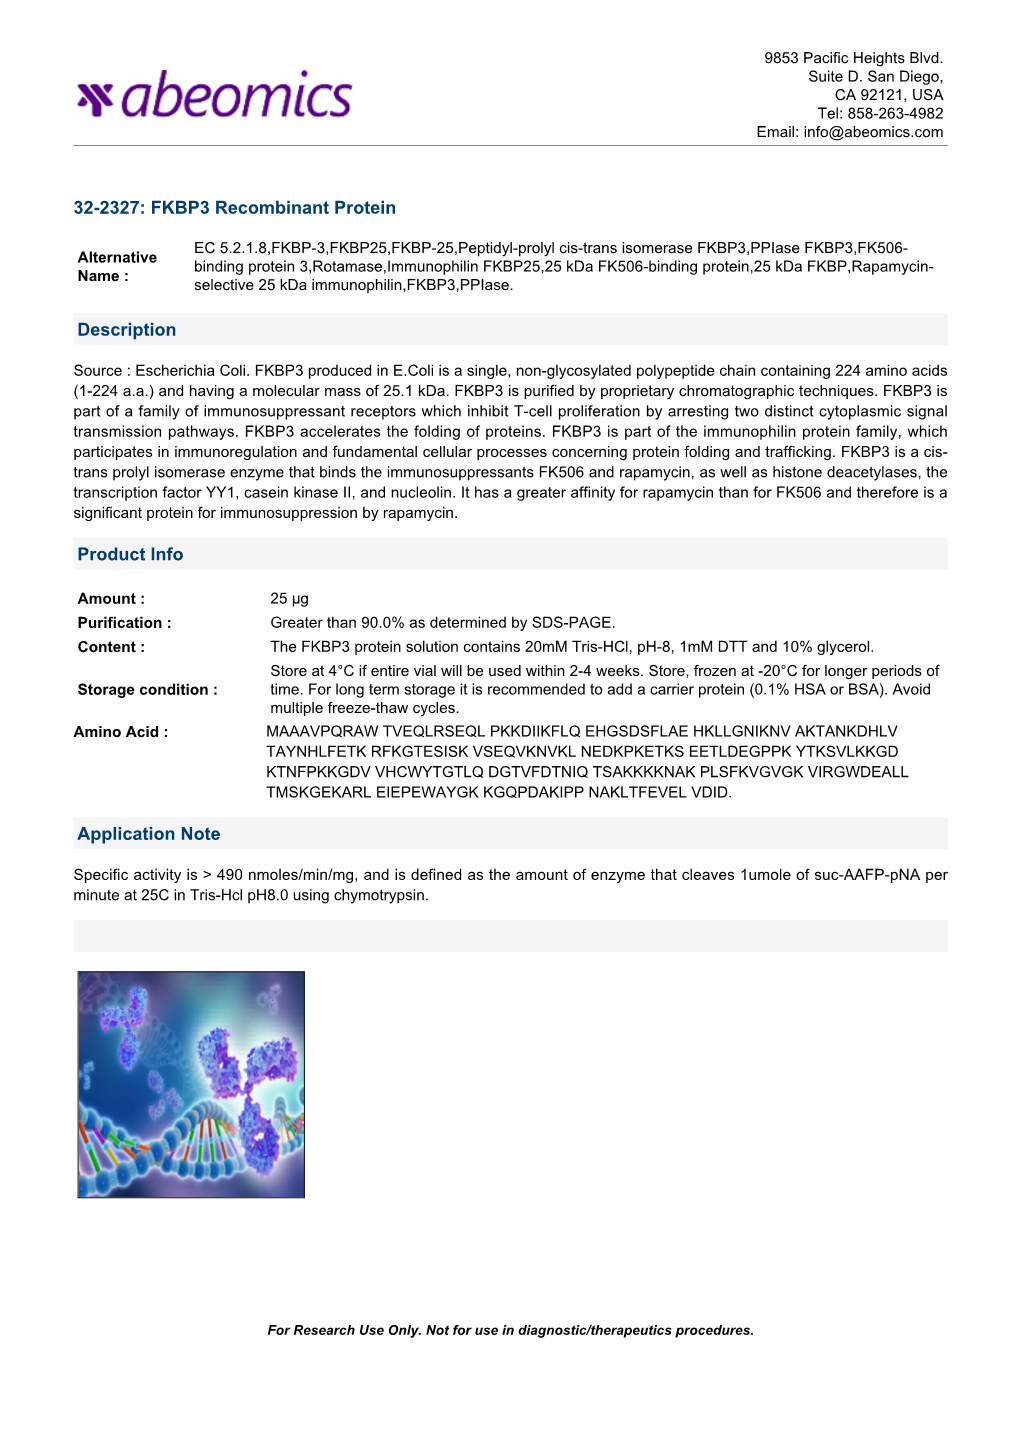 32-2327: FKBP3 Recombinant Protein Description